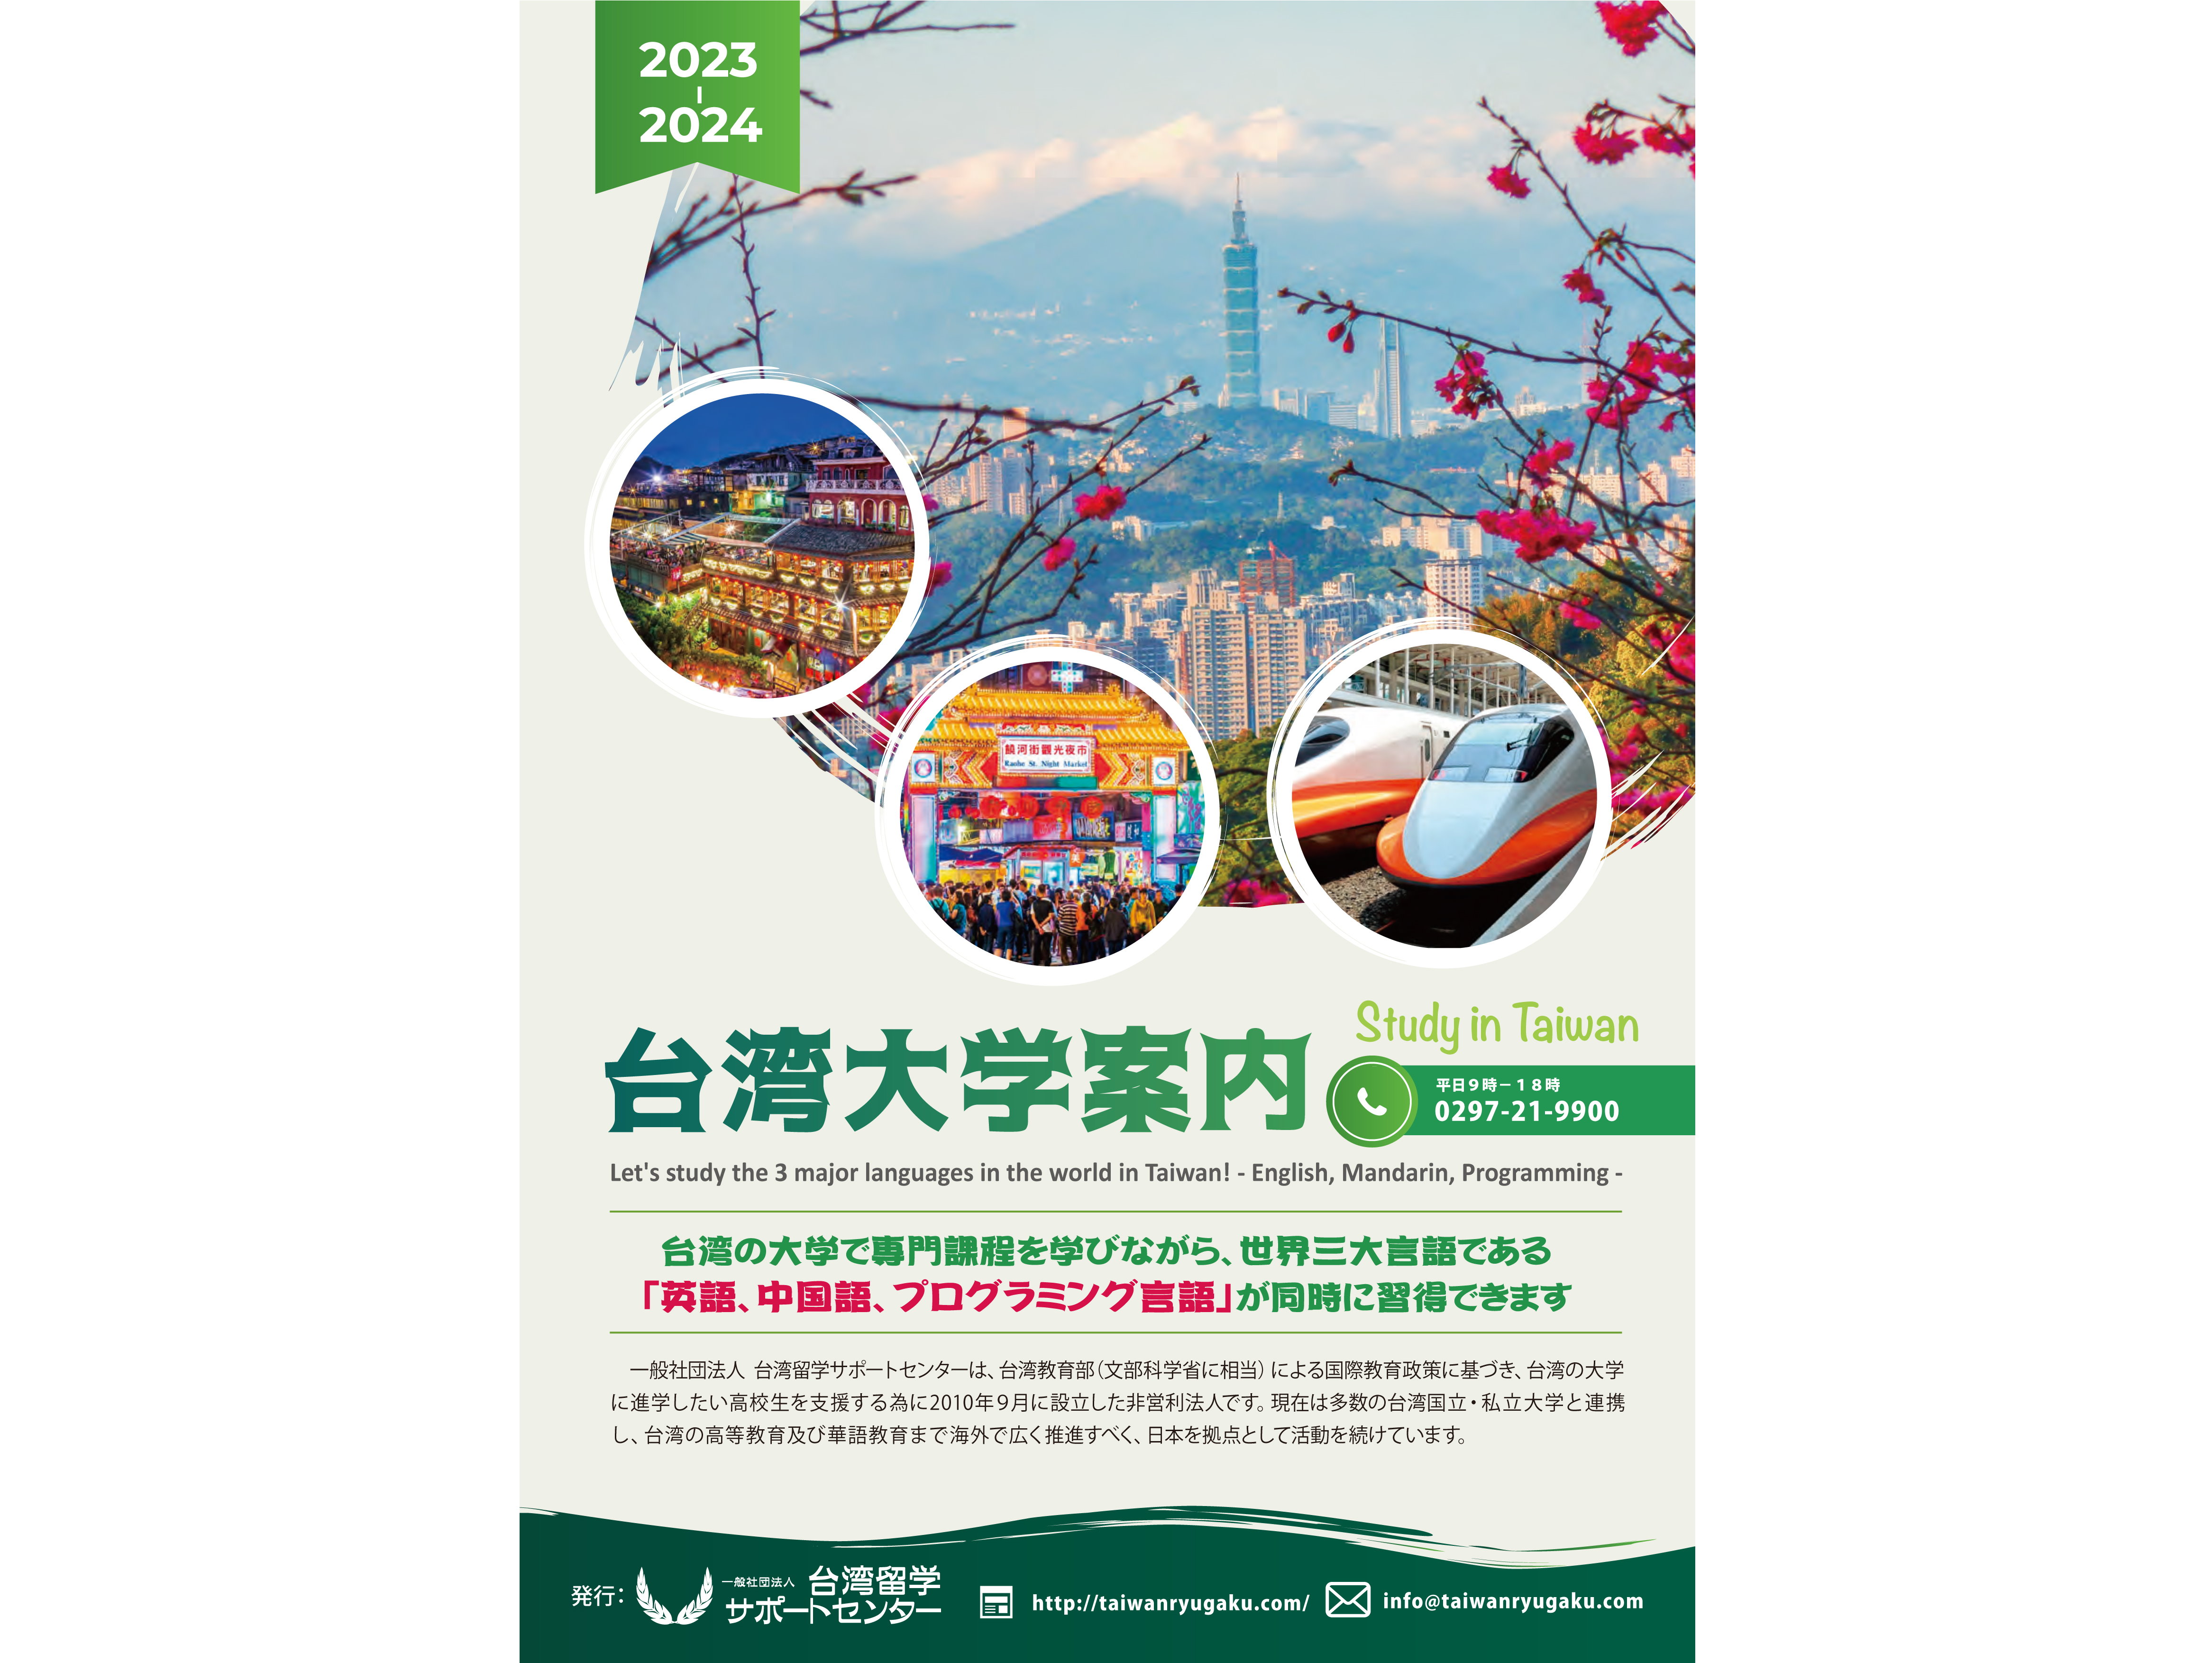 The advertisement in Japan: “Undergraduate Programs in Taiwan 2023-2024”